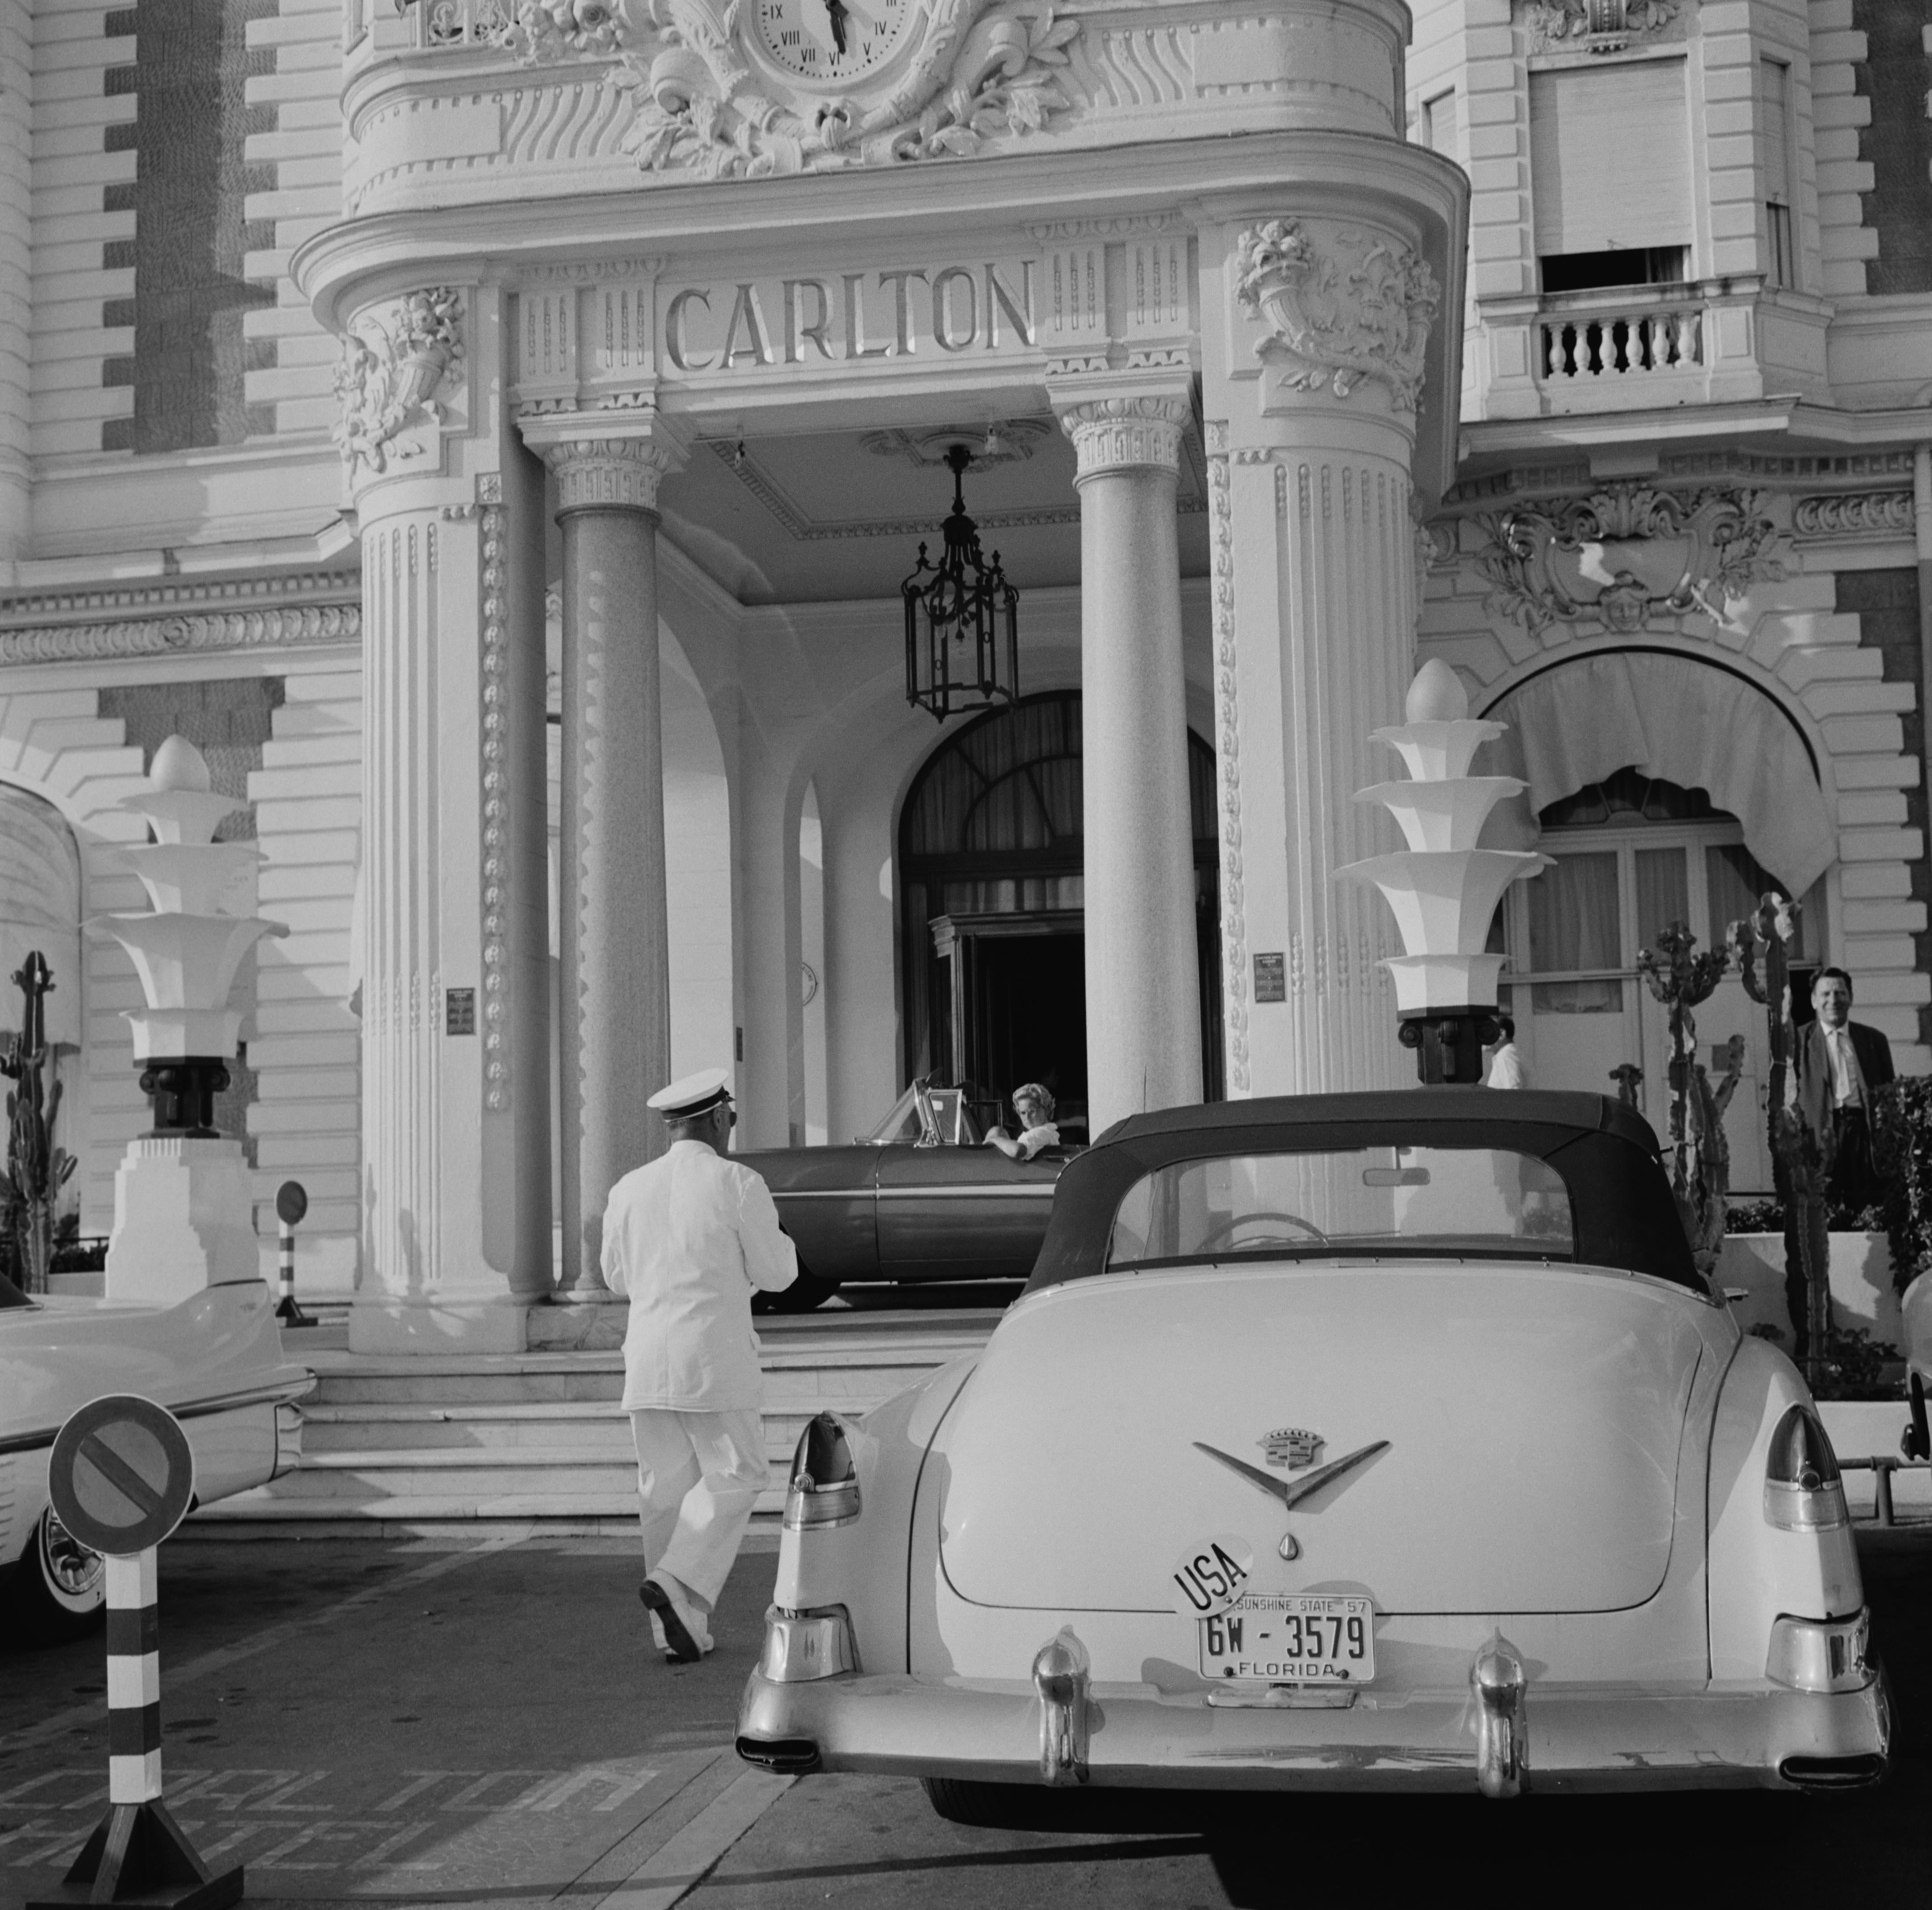 Landscape Photograph Slim Aarons - The Carlton Hotel (1955) - Estampillé « Limited Estate Stamped » - Tirage gélatino-argentique en fibres d'argent